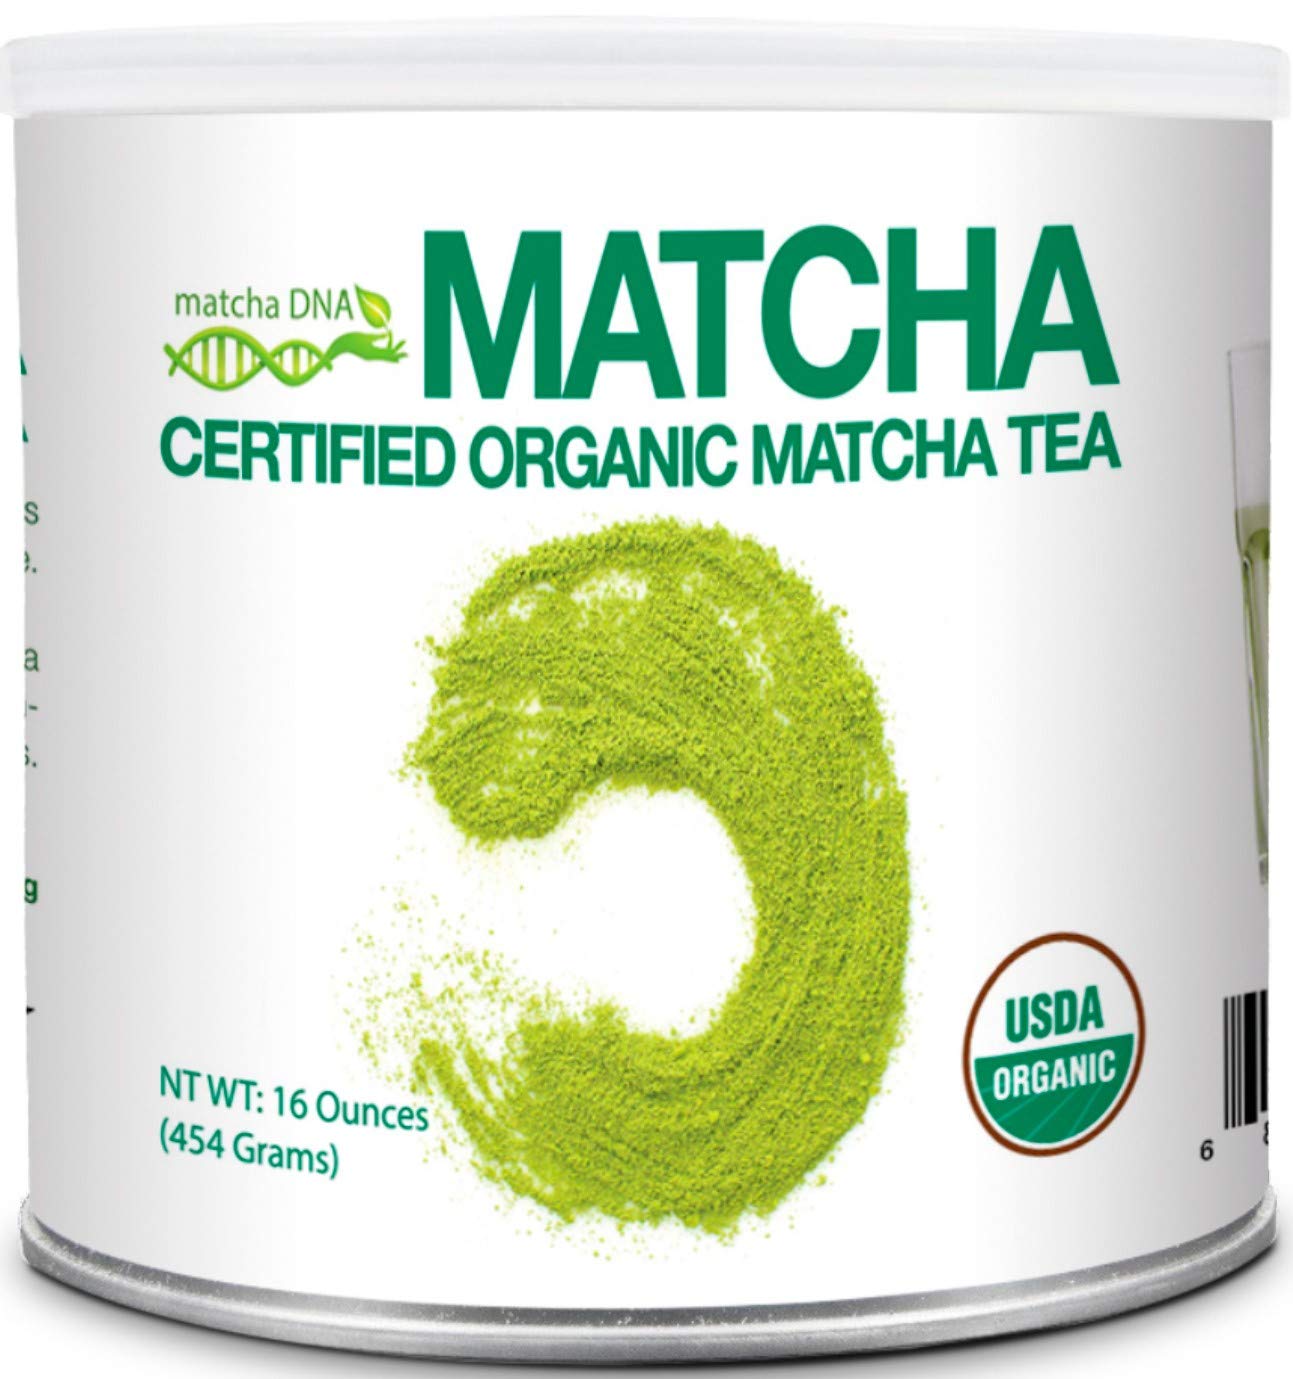 <strong>5. MatchaDNA 1 LB Certified Organic Matcha Green Tea Powder</strong>